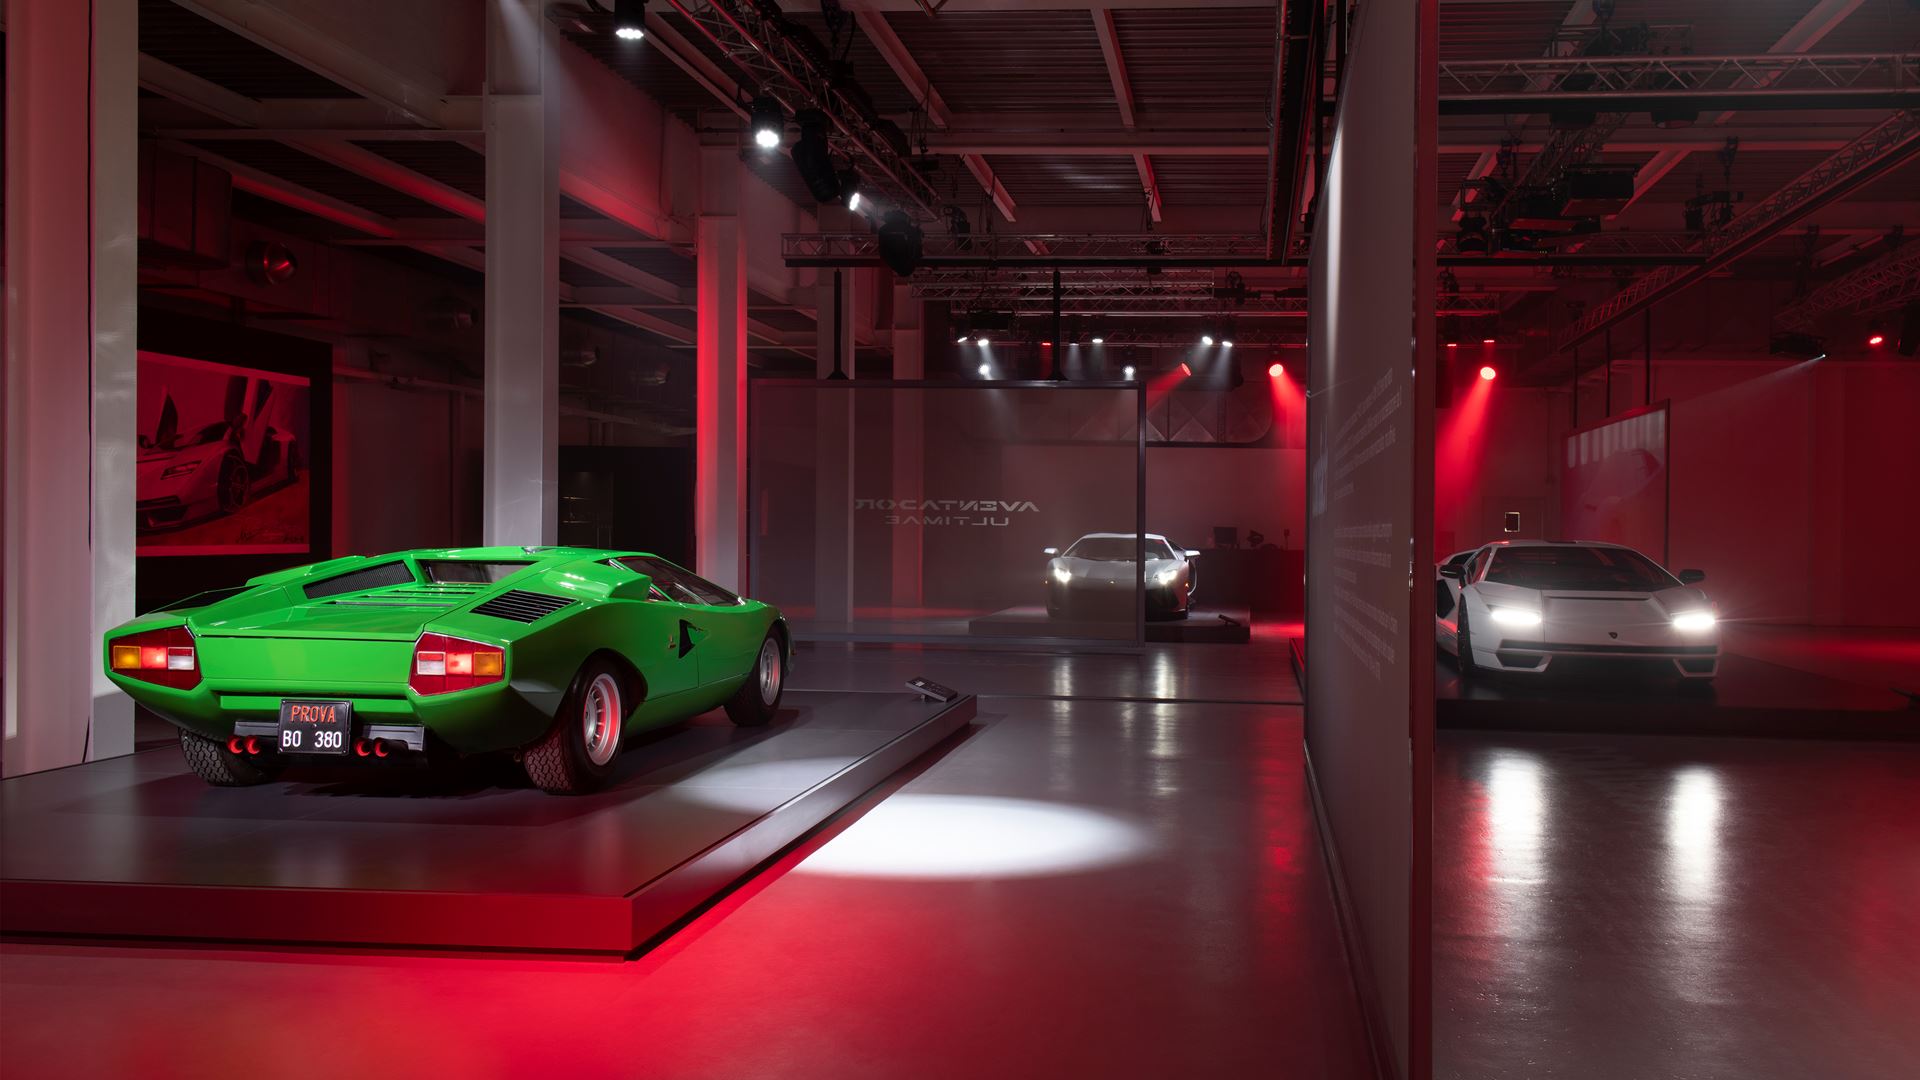 Lamborghini presents the Countach LPI 800-4 at Milan Design Week, celebrating its uniquely inspirational design - Image 3